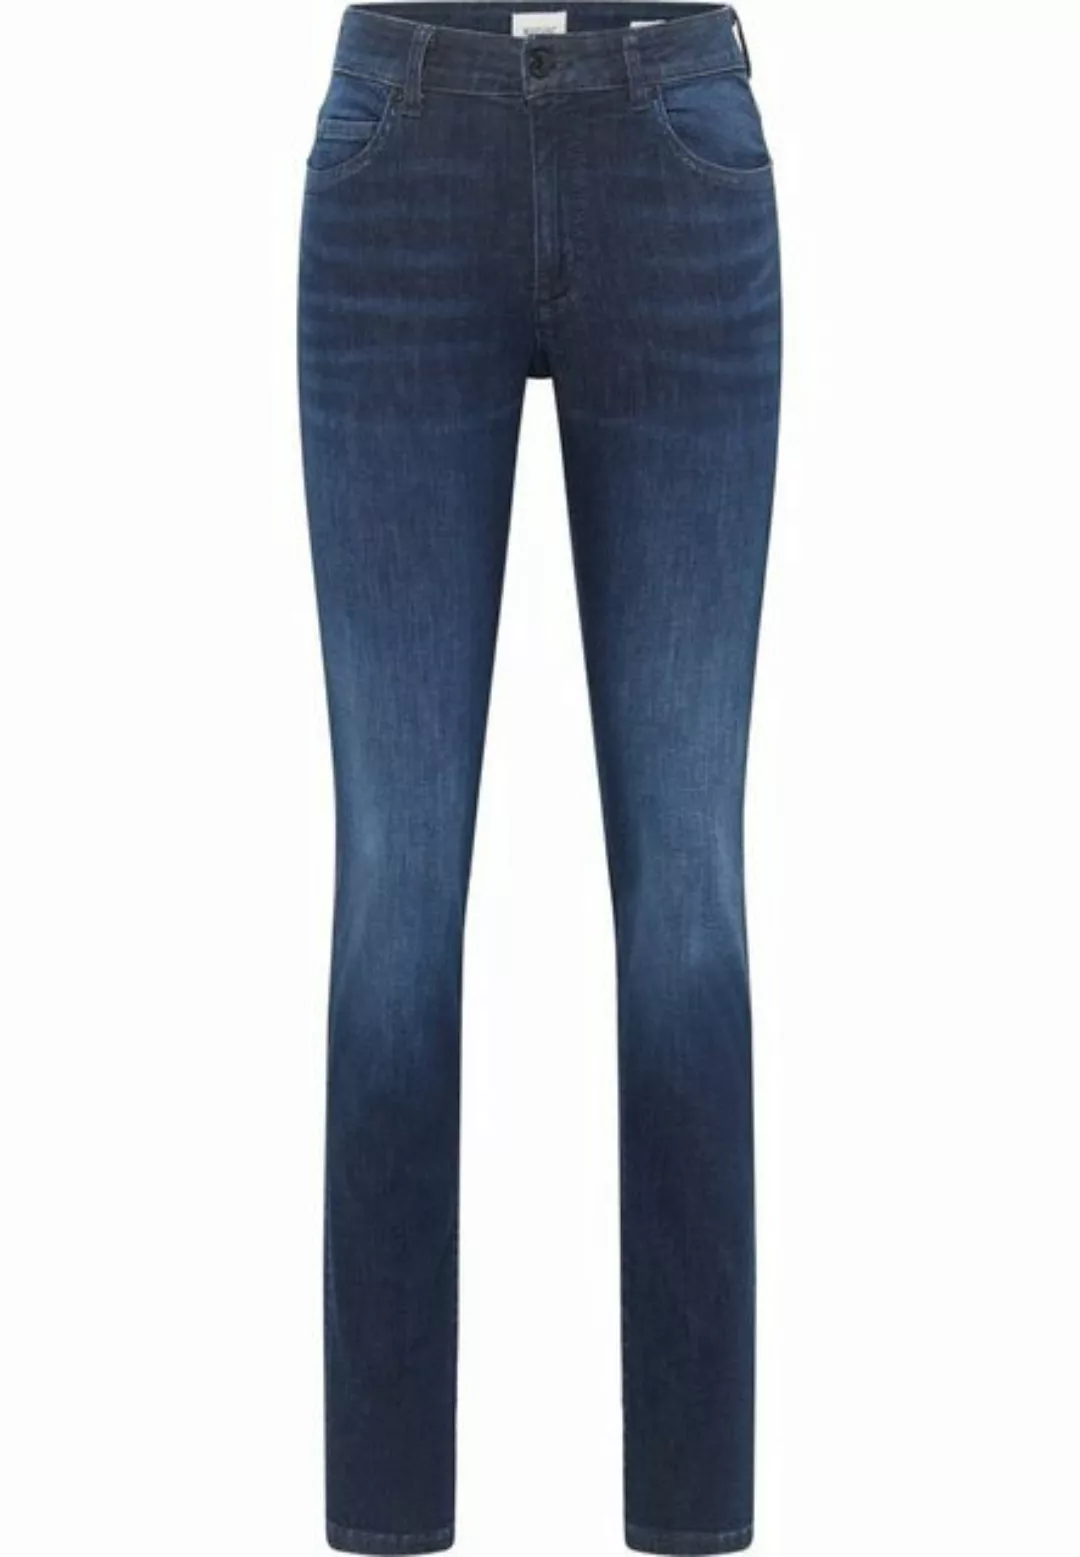 MUSTANG Slim-fit-Jeans "Style Crosby Relaxed Slim" günstig online kaufen